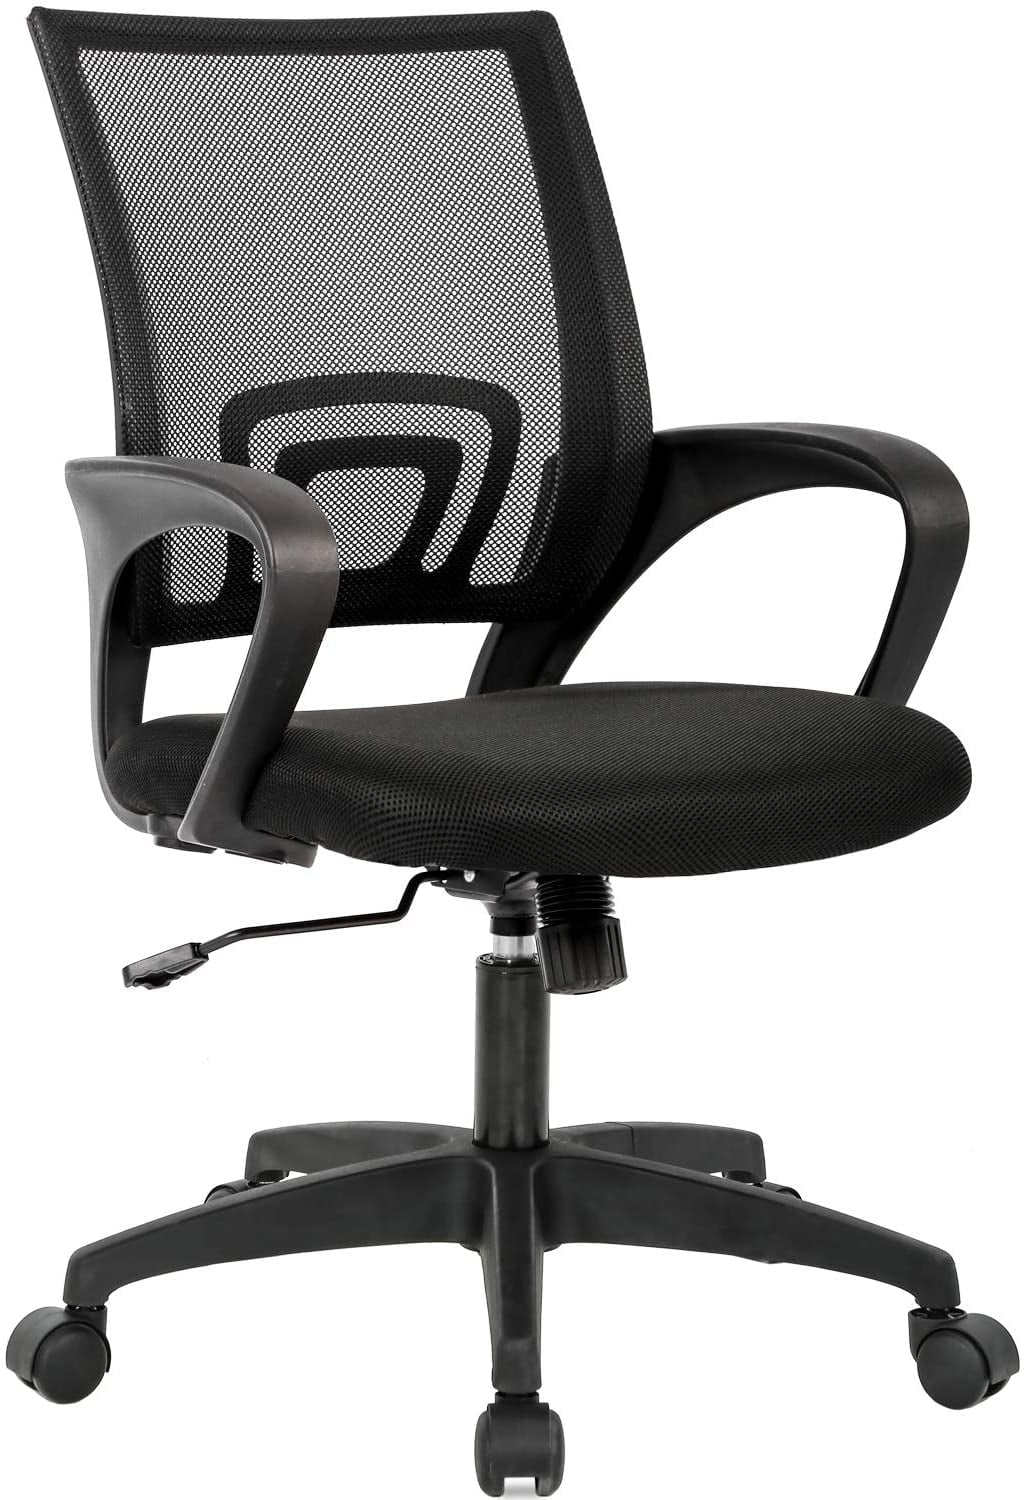 PayLessHere Ergonomic Desk Swivel Rolling Computer Executive Lumbar Support Task Mesh Chair Adjustable Stool for Women&Men Black